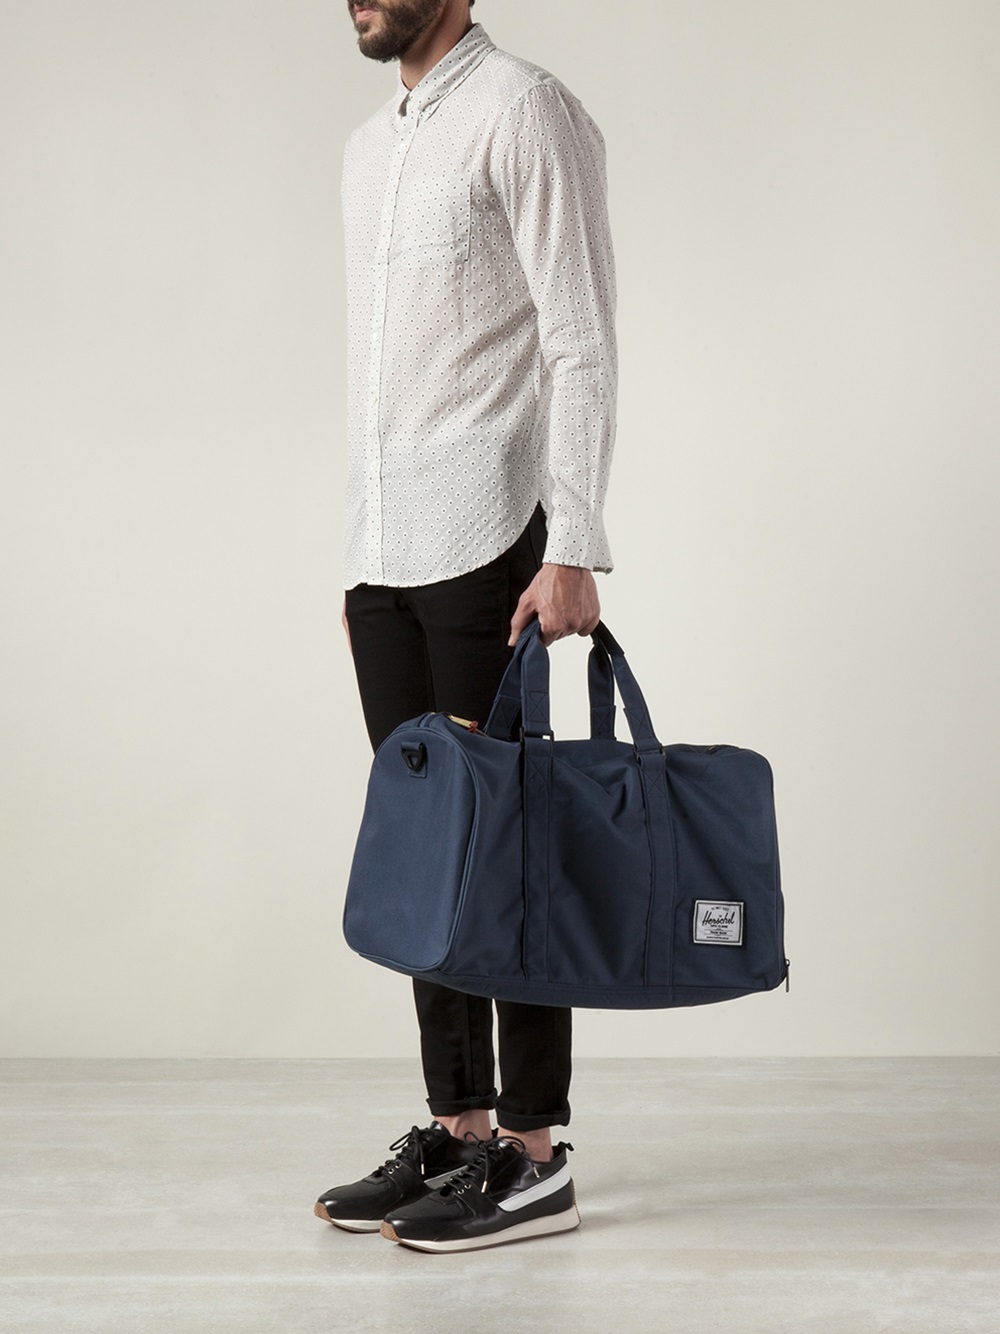 Lyst - Herschel Supply Co. Novel Knit Duffle Bag in Blue for Men